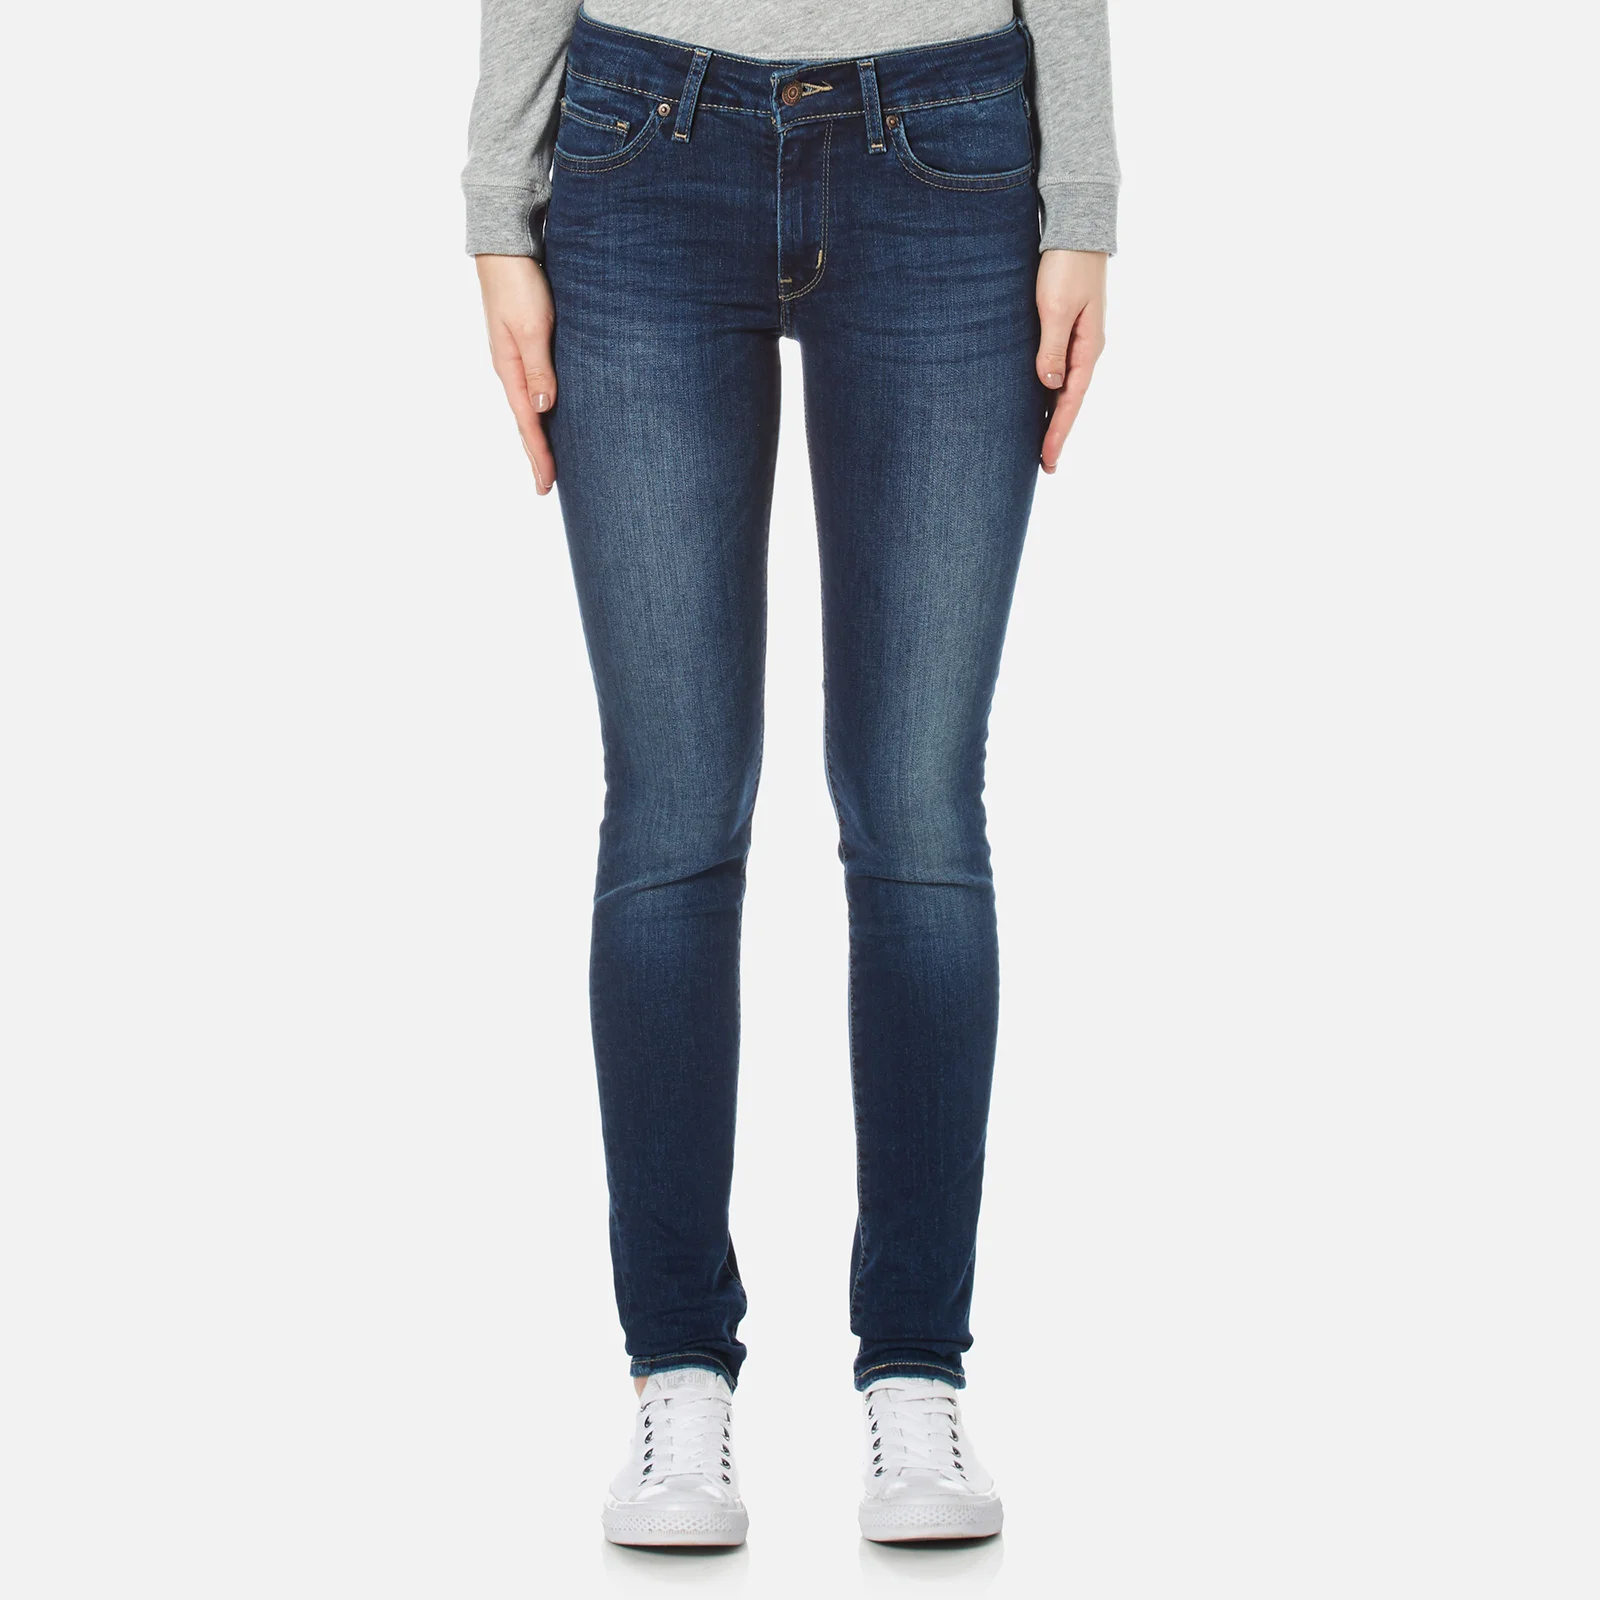 Levi's Women's 711 Skinny Jeans - Long Way Blues Image 1